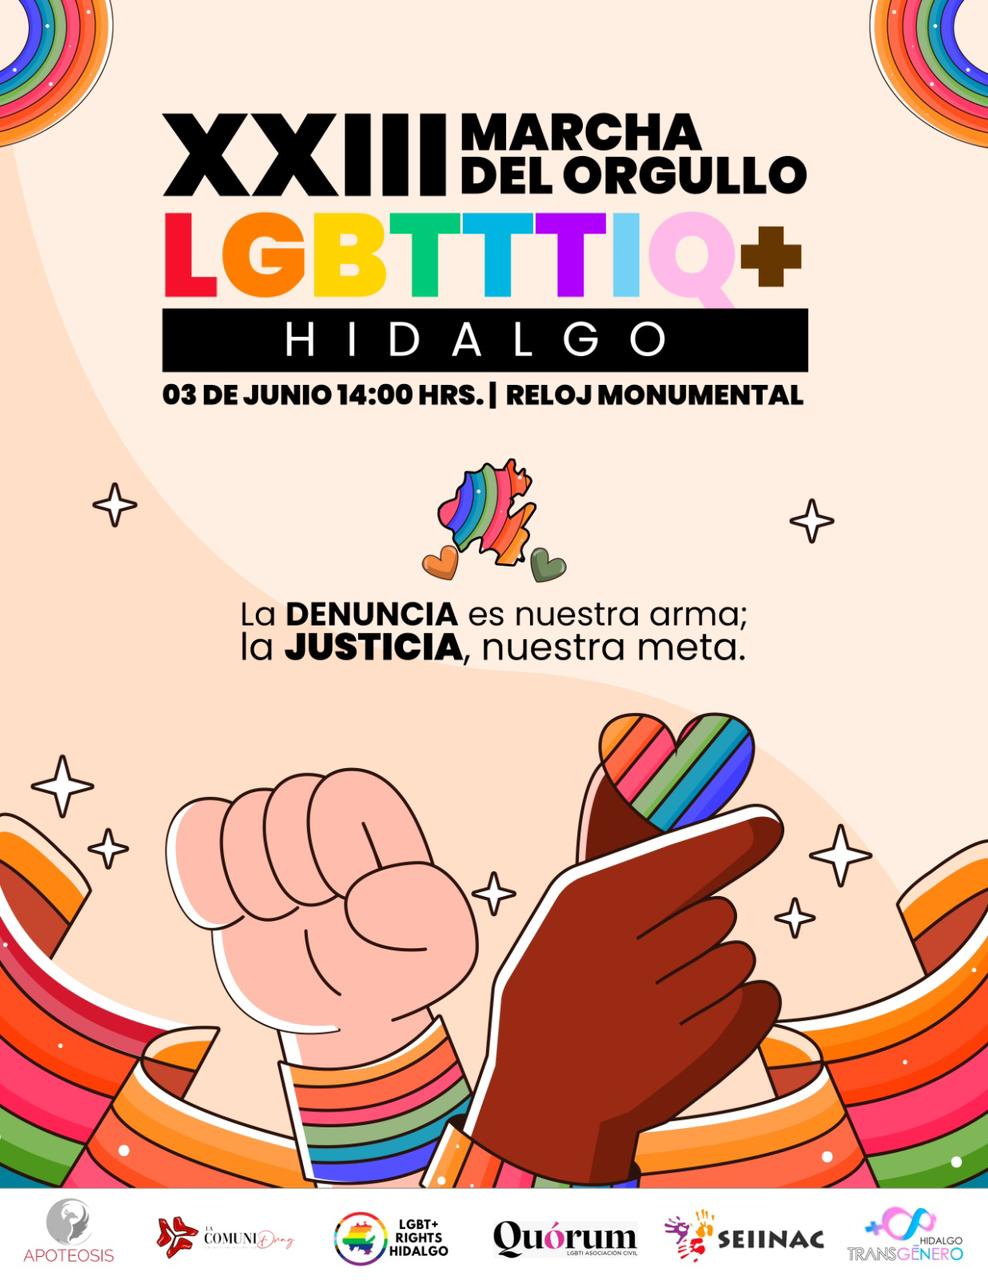 Marcha LGBTTTI HidalgoImagen 1 de 2